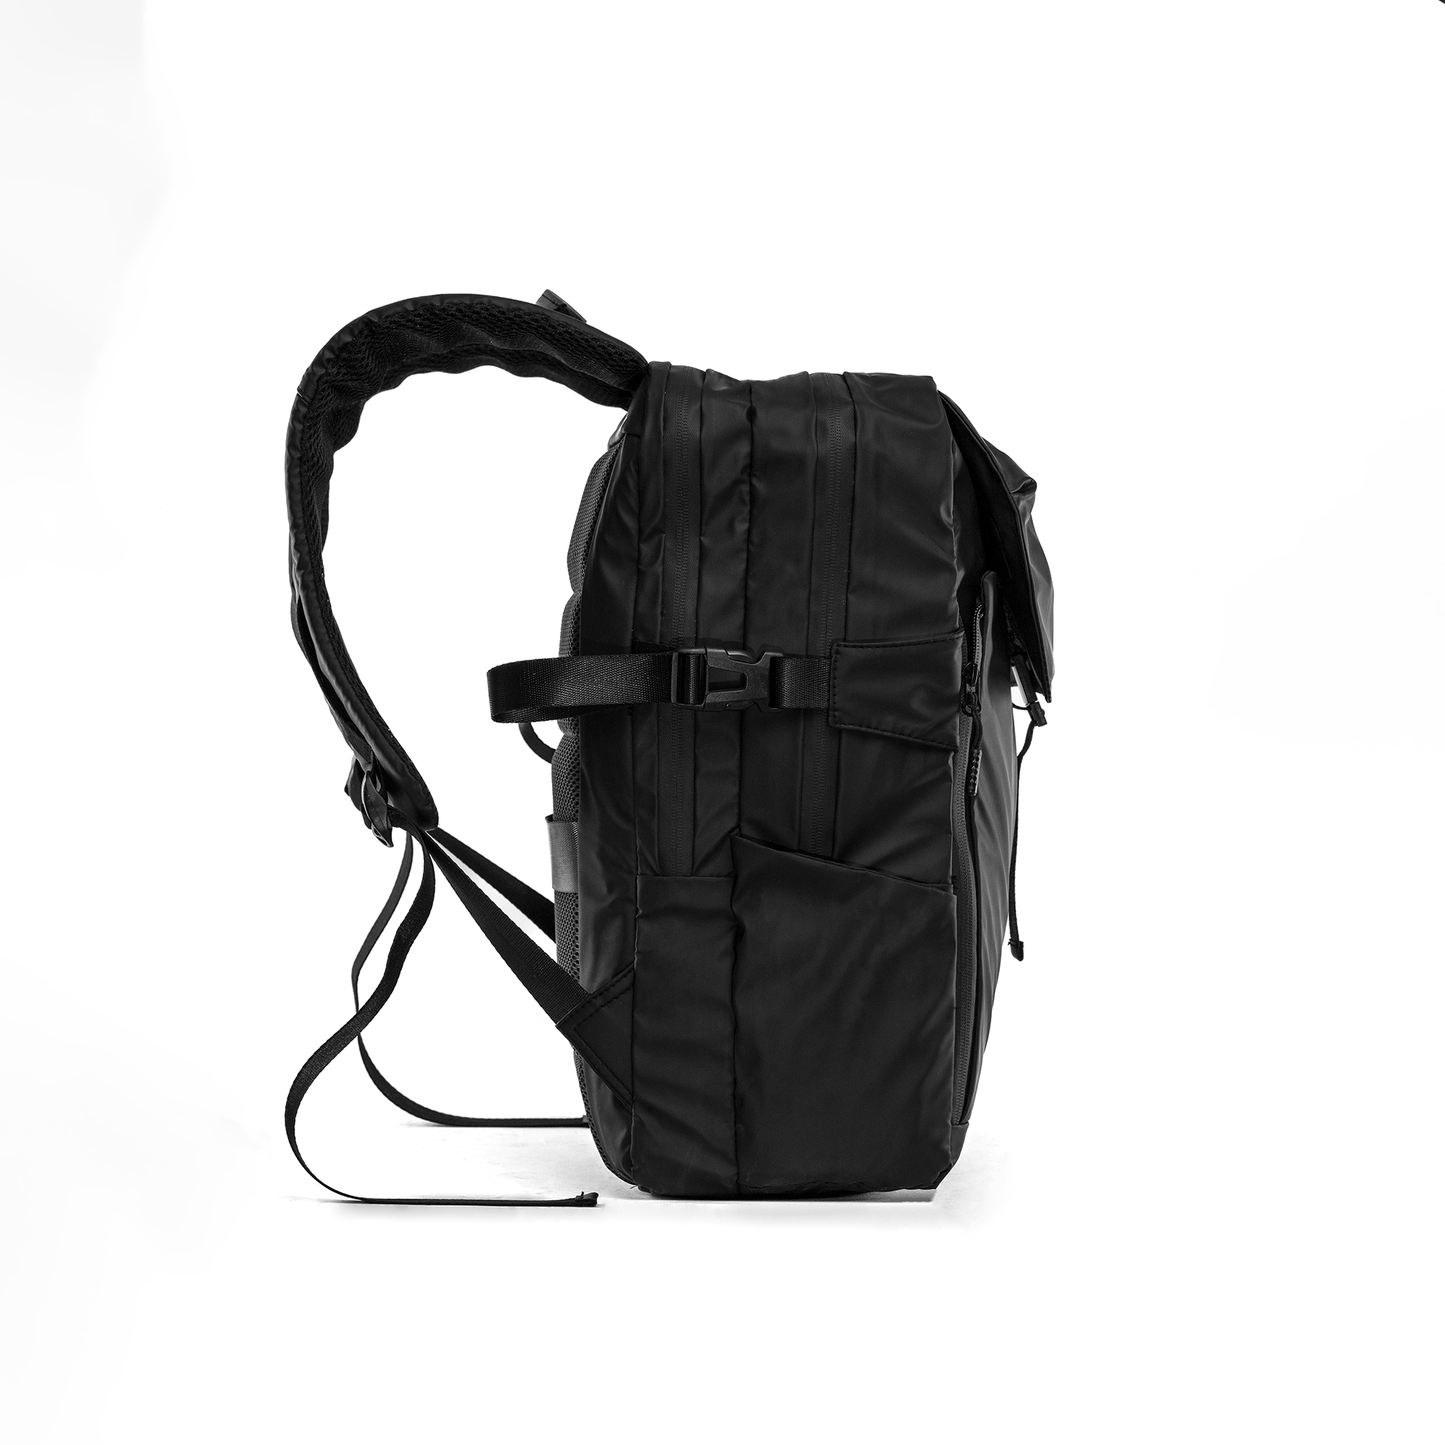 XTravel Backpack